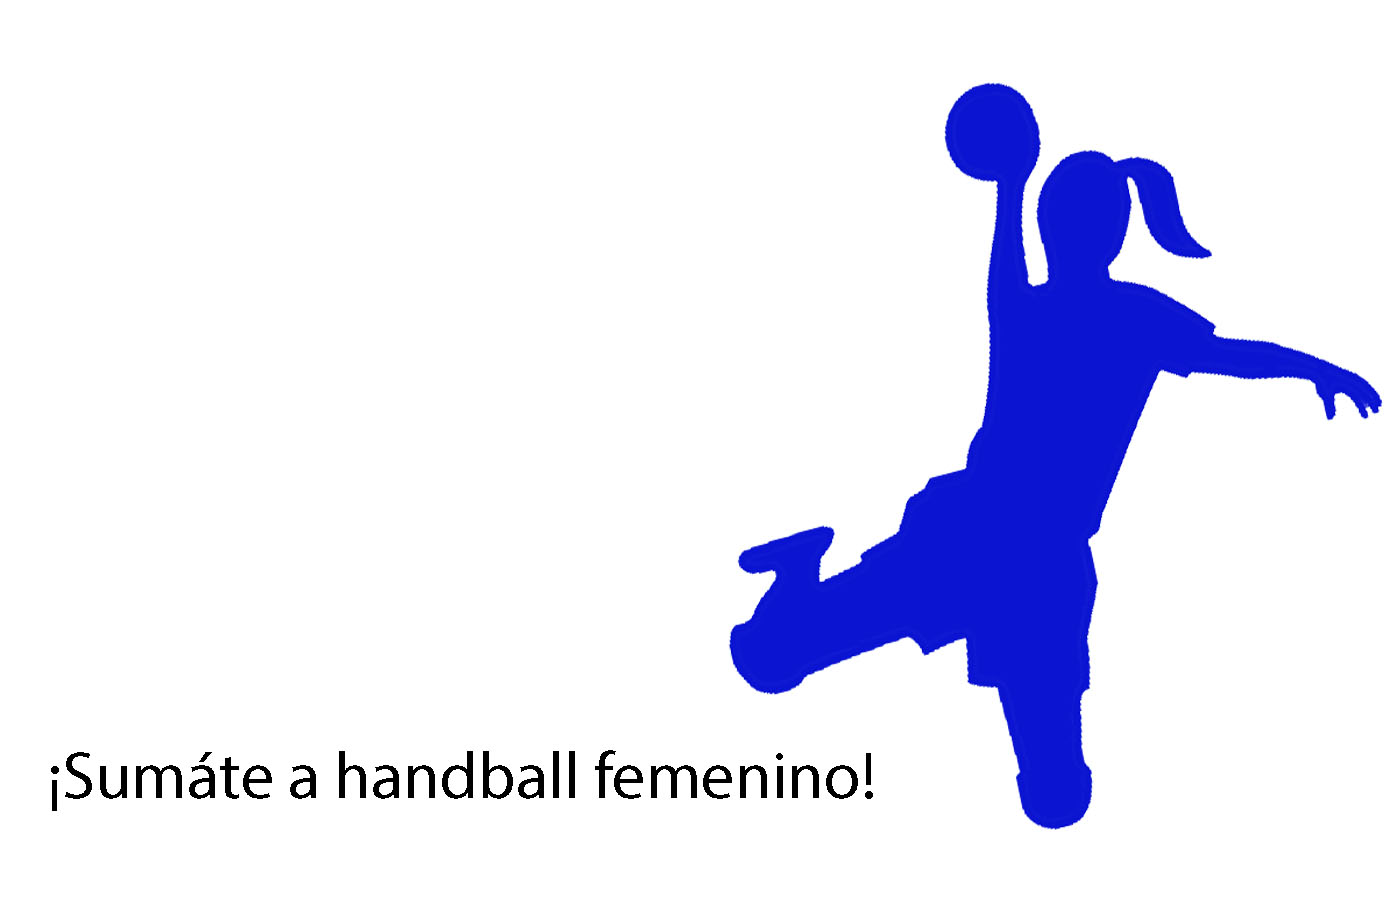 Convocatoria para integrar el equipo de Hanball femenino